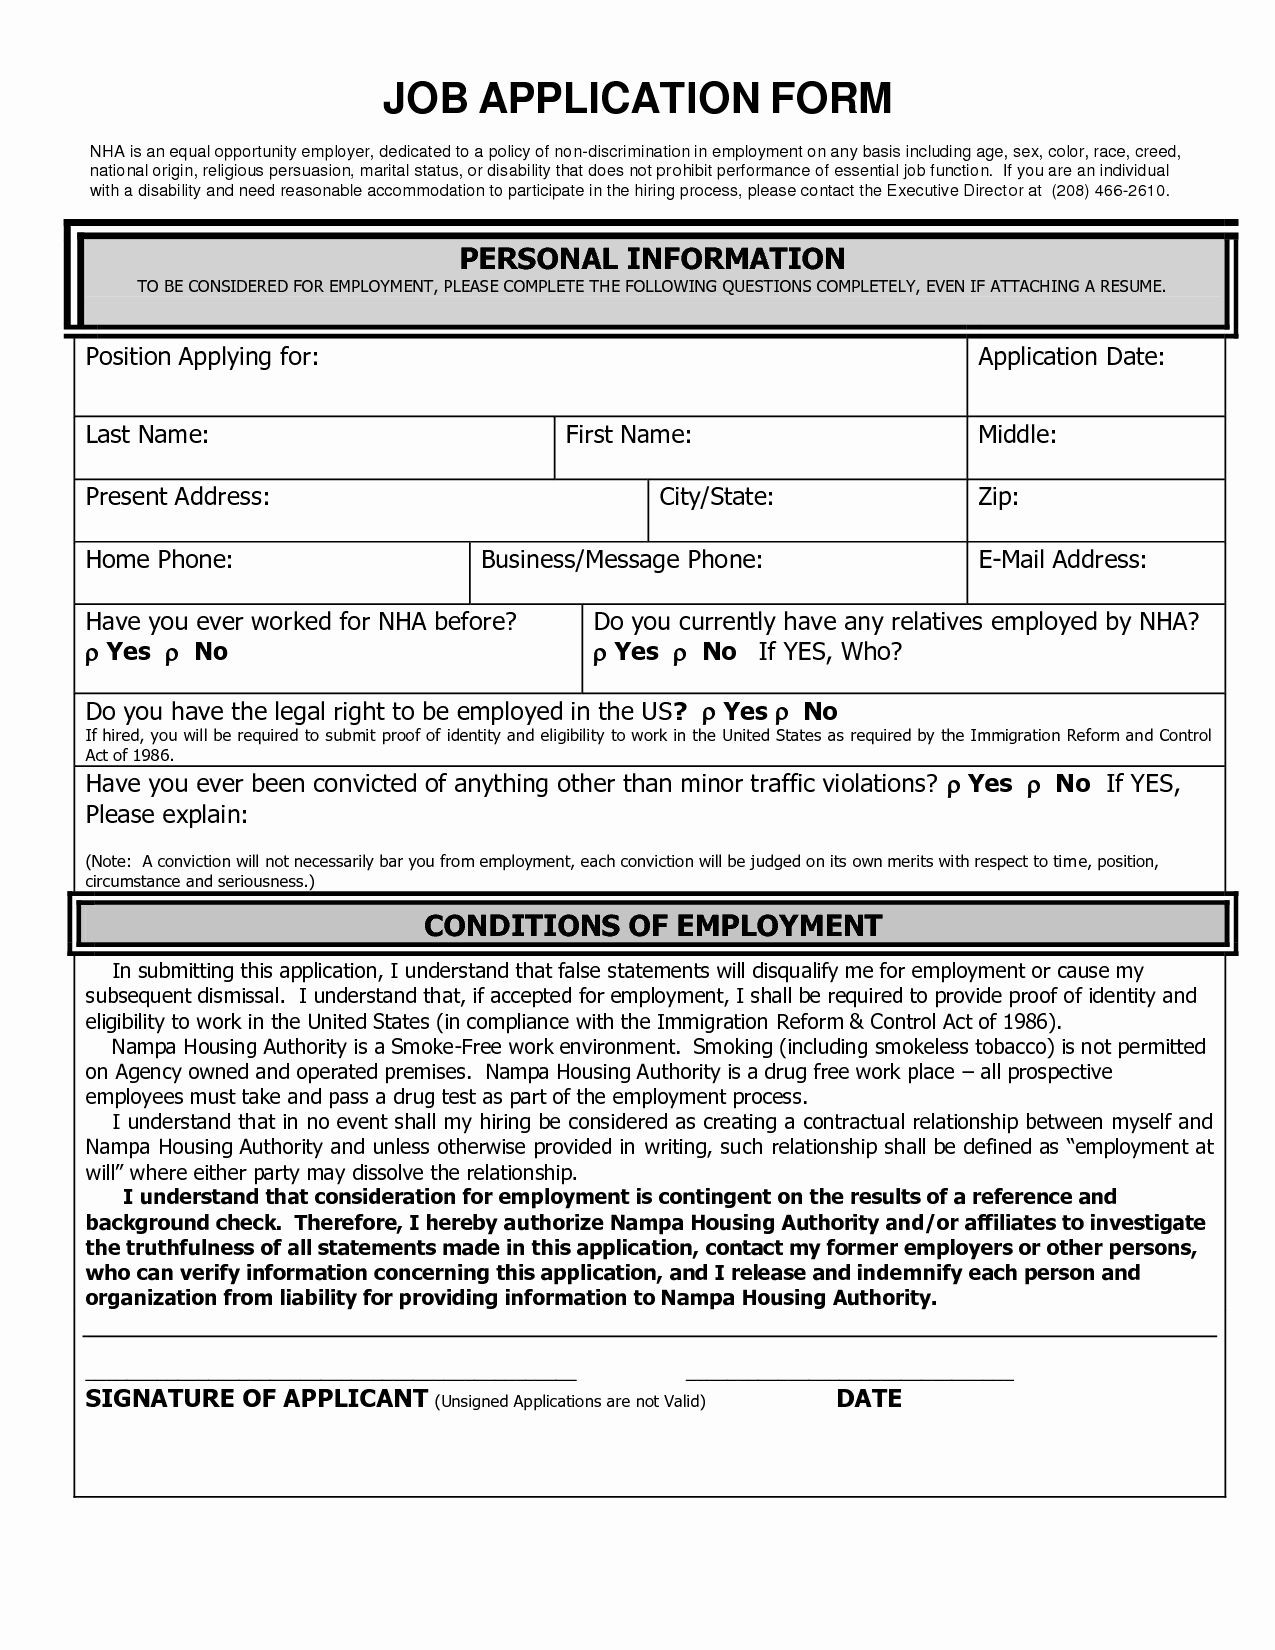 40 Jobs Application Form Pdf In 2020 | Job Application, Job-Blank I-9 Form 2020 Printable Form Free